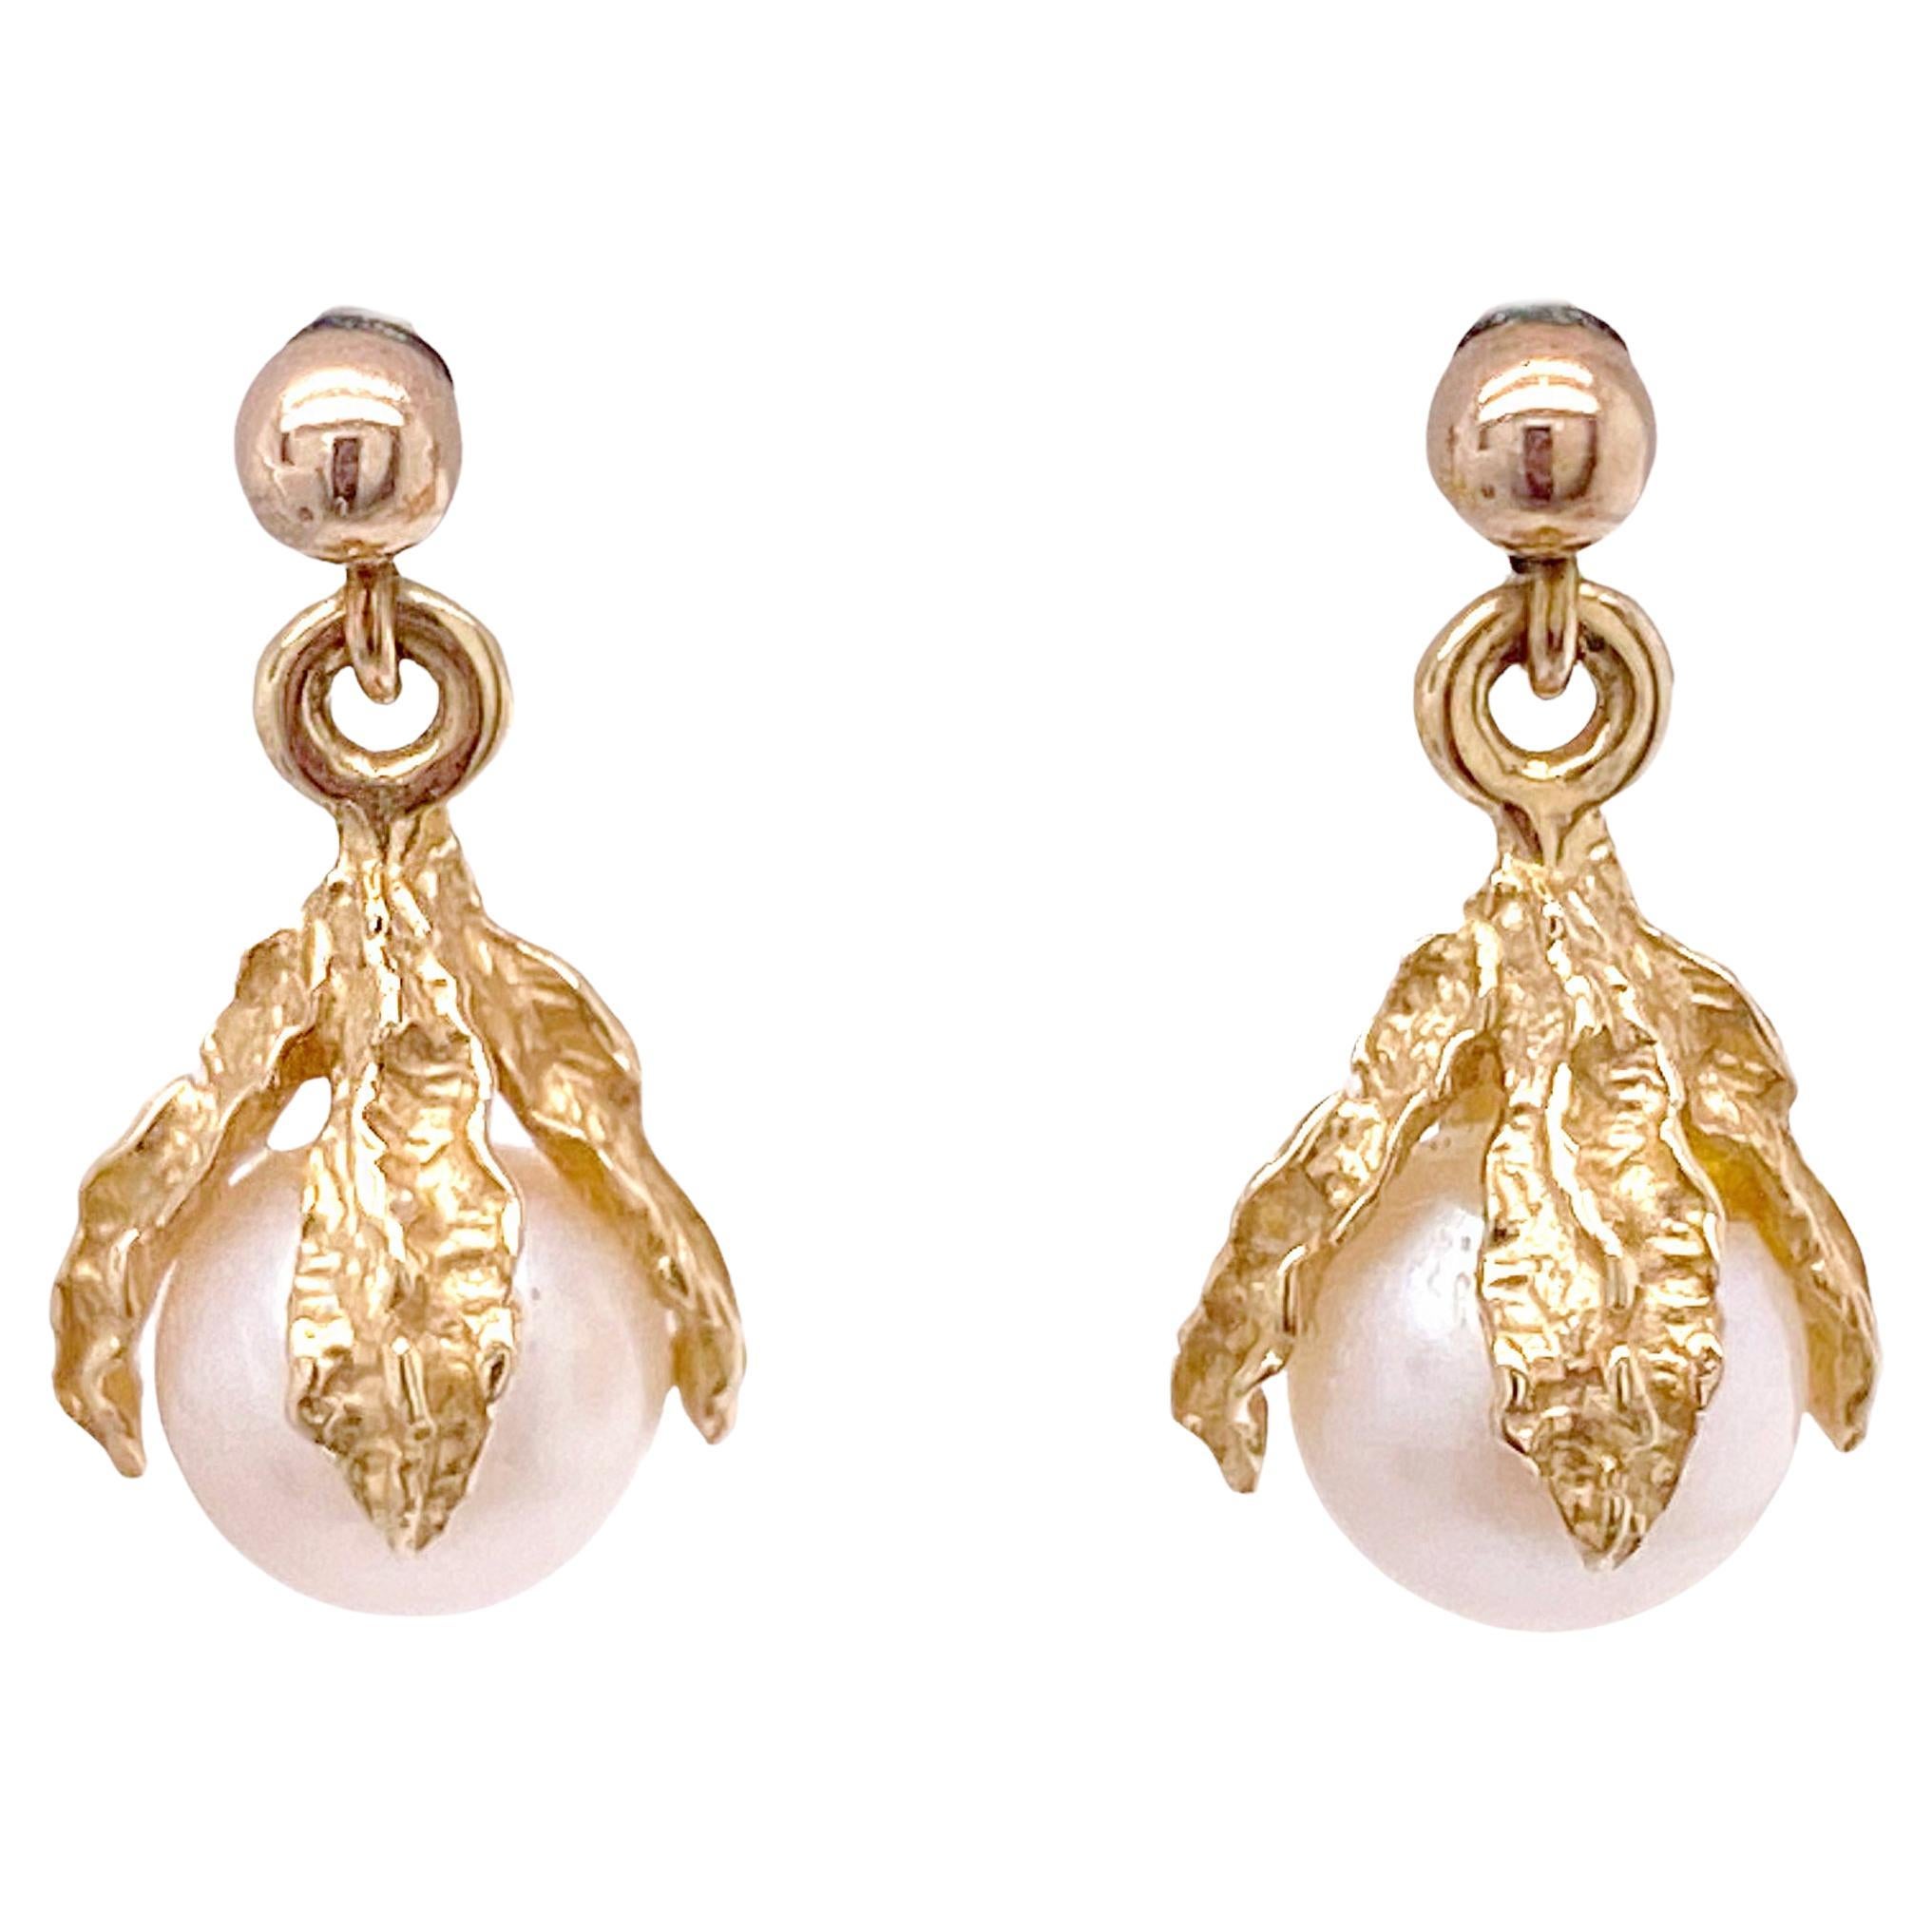 Pearl Drop Earrings, Talon Design w Japanese Cultured Pearls, AAAA Quality